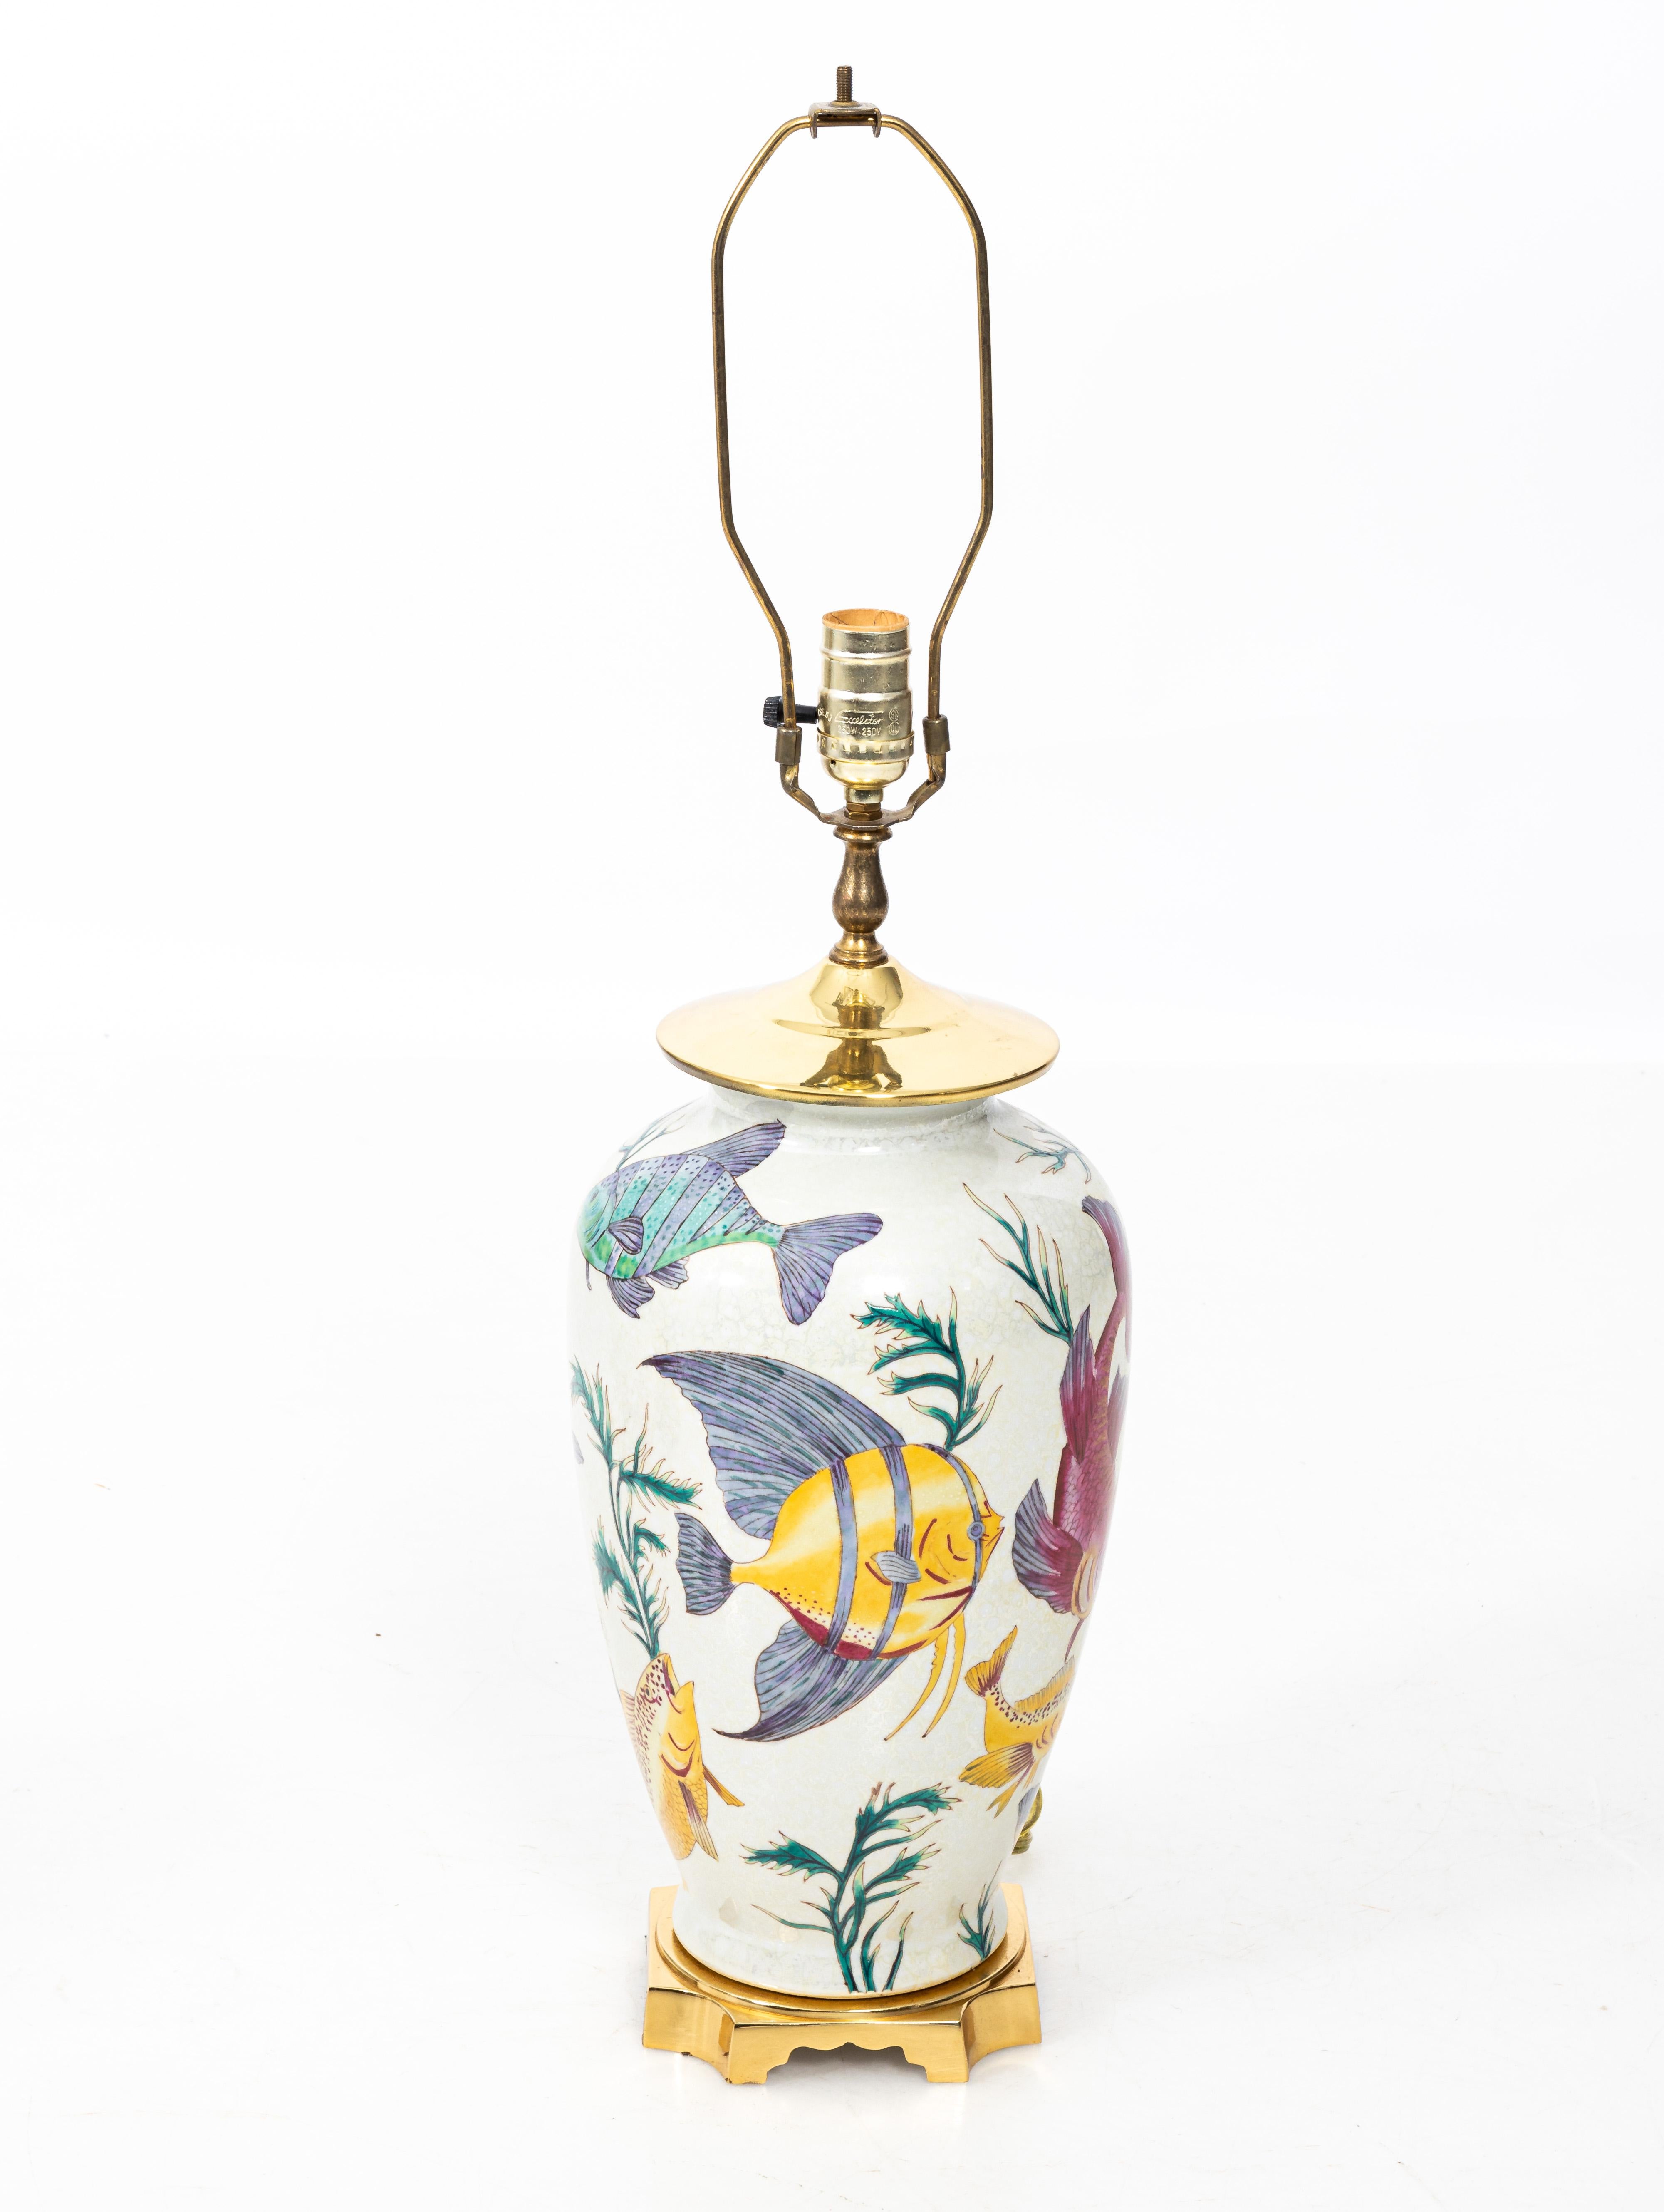 Pair of vintage porcelain crackle glaze fish motif lamps with brass bases.